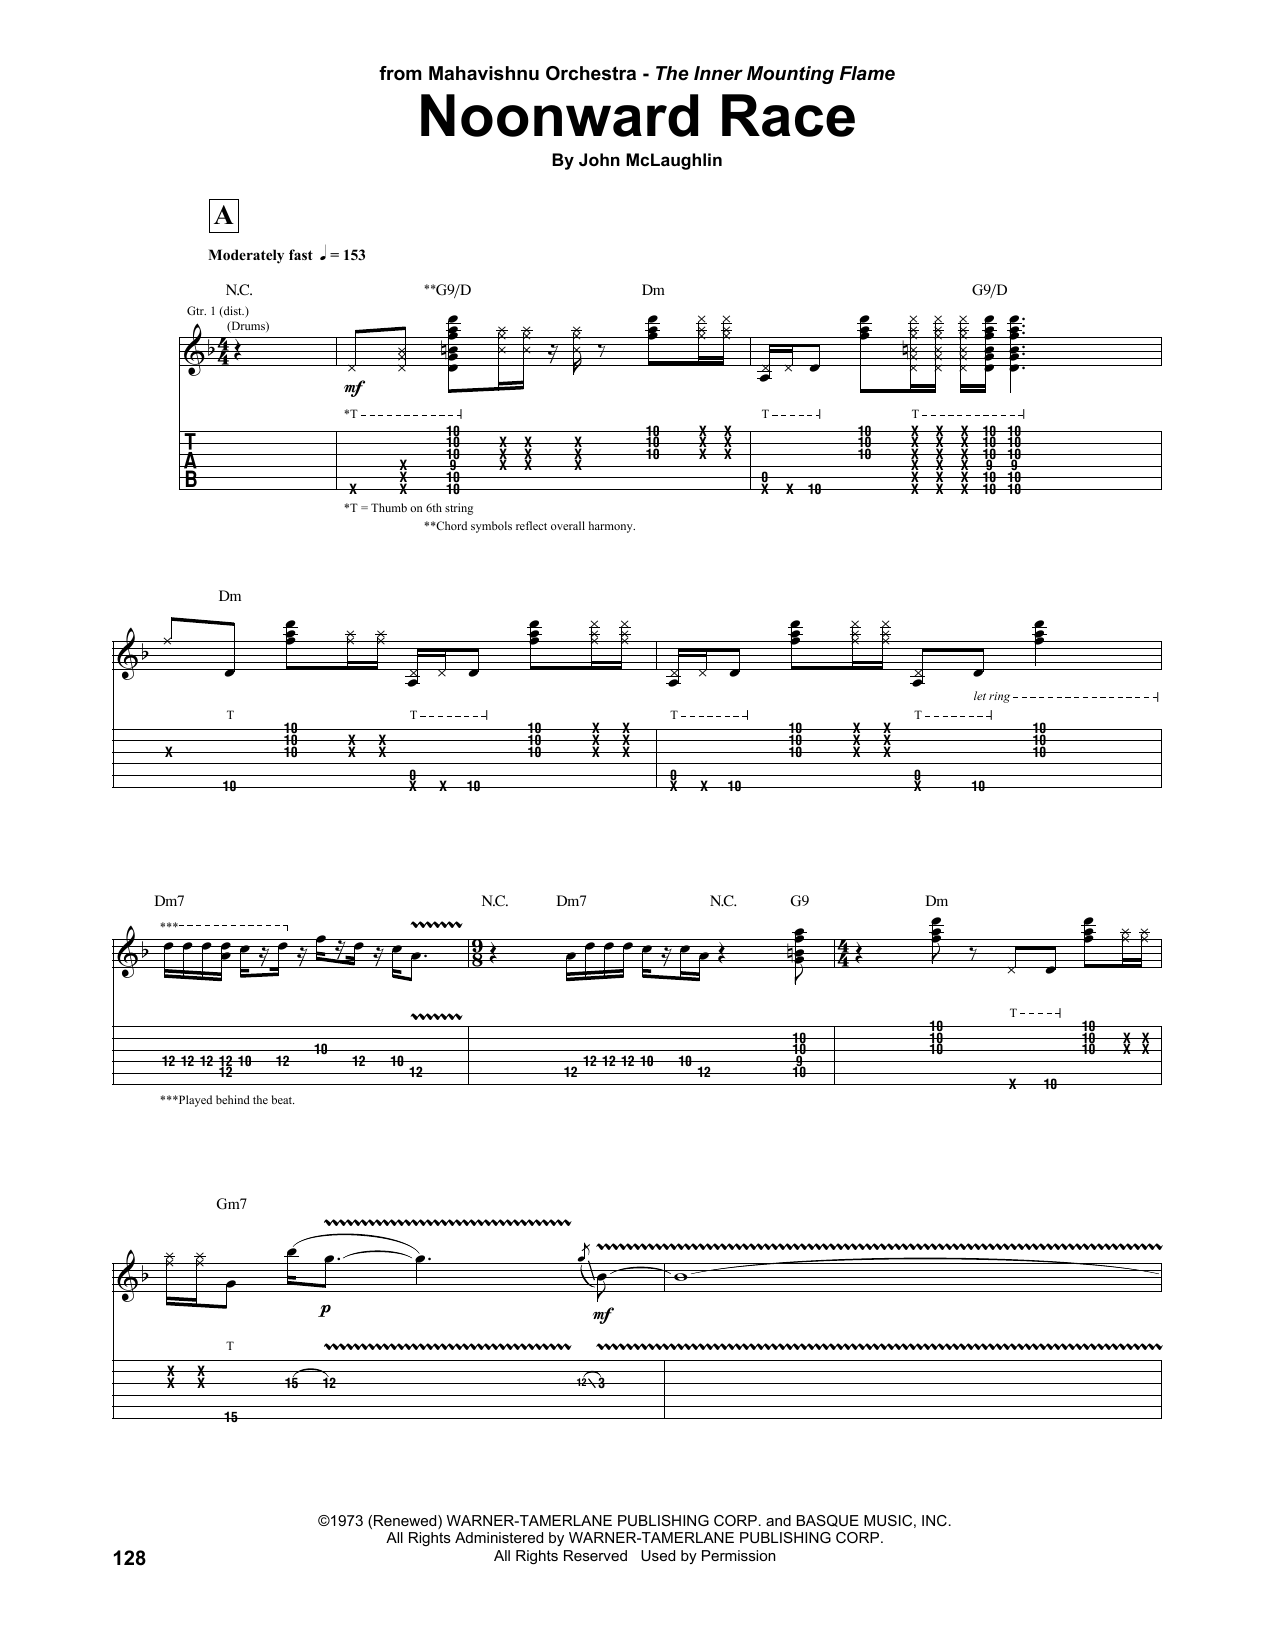 Download Mahavishnu Orchestra Noonward Race Sheet Music and learn how to play Guitar Tab PDF digital score in minutes